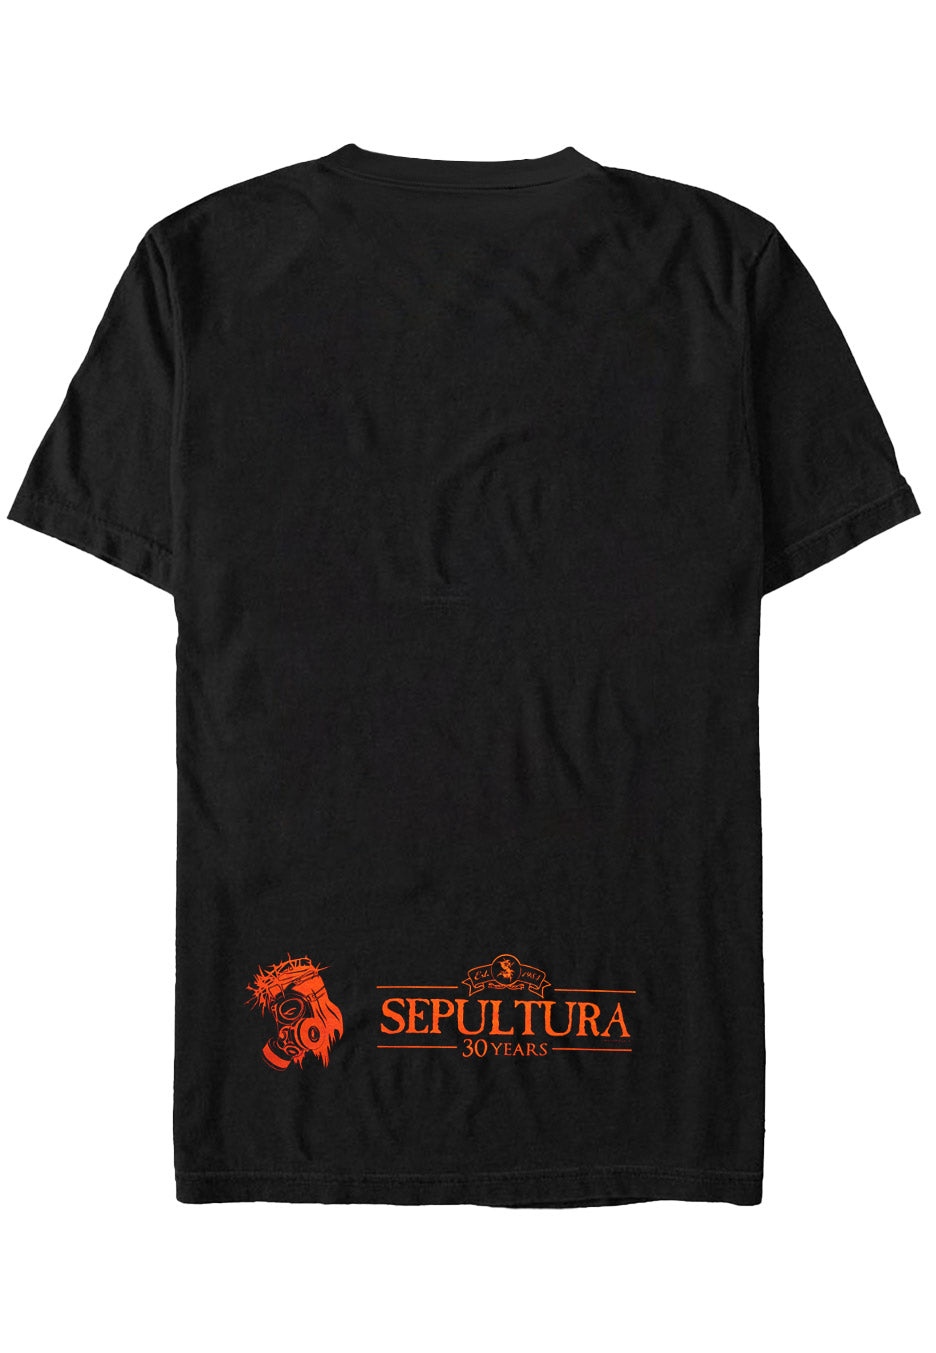 Sepultura - Arise 30 Years - T-Shirt